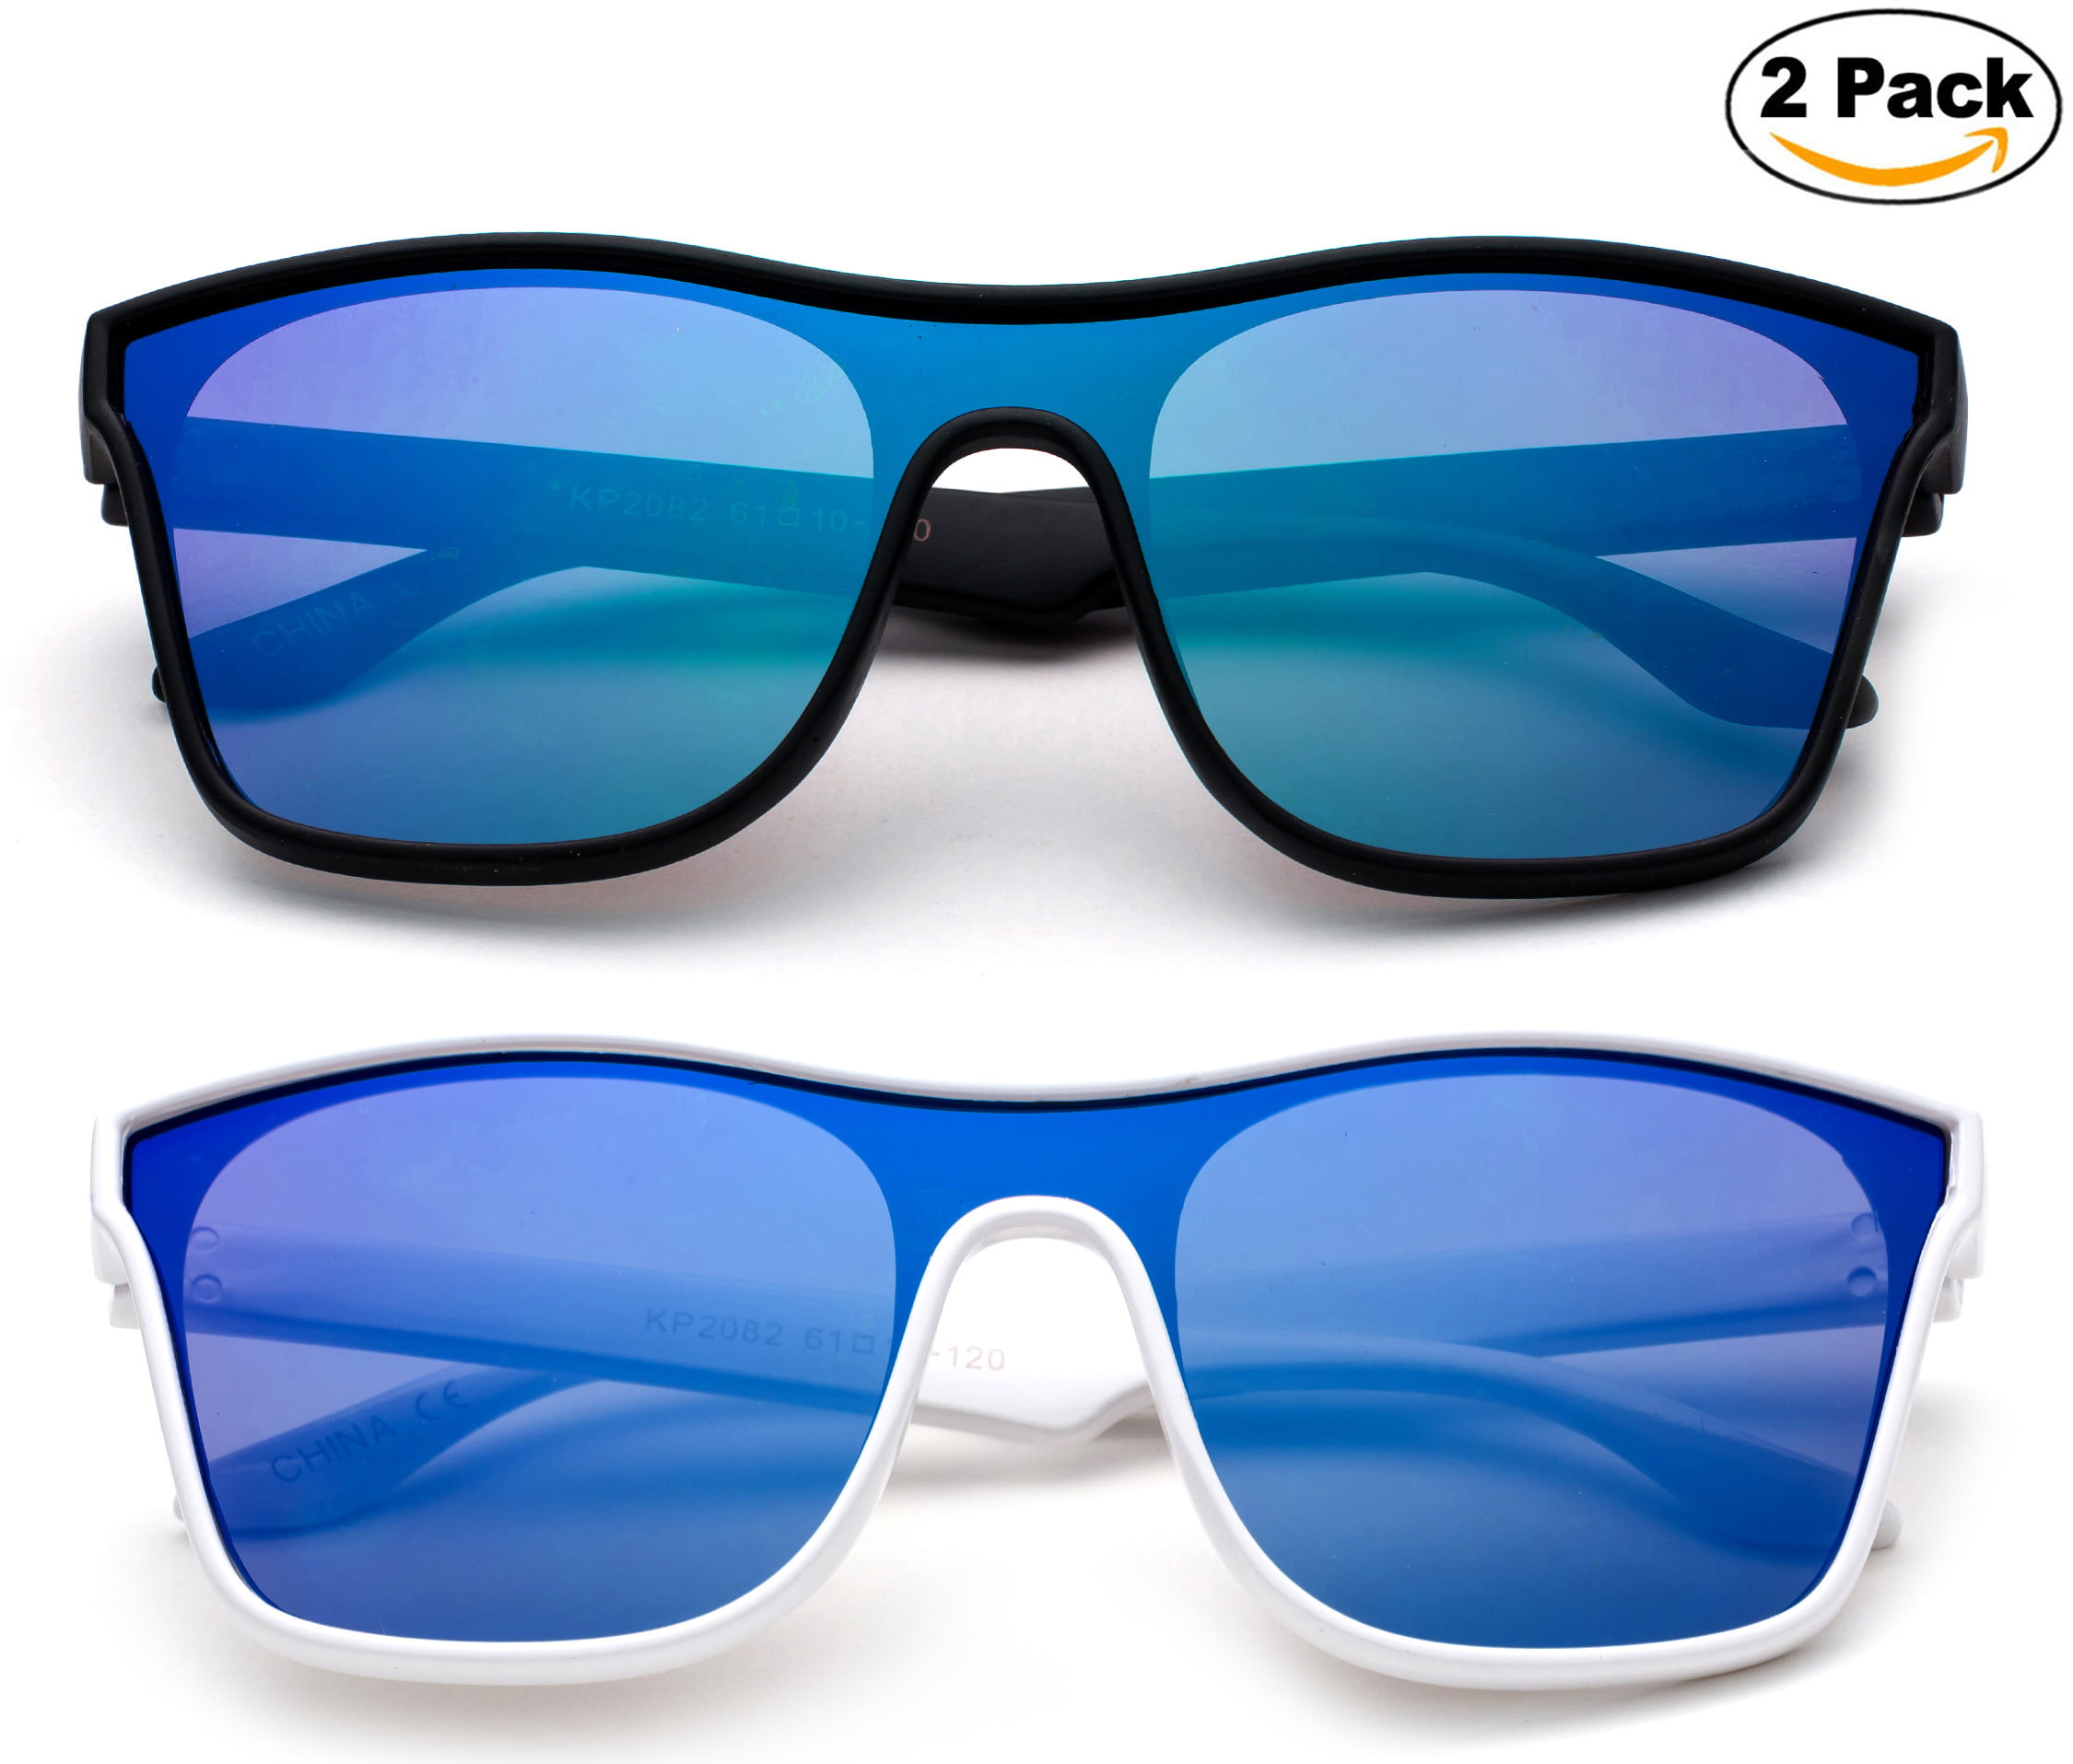 Newbee Fashion - Kids Shield Sunglasses Boys Sunglasses Cool